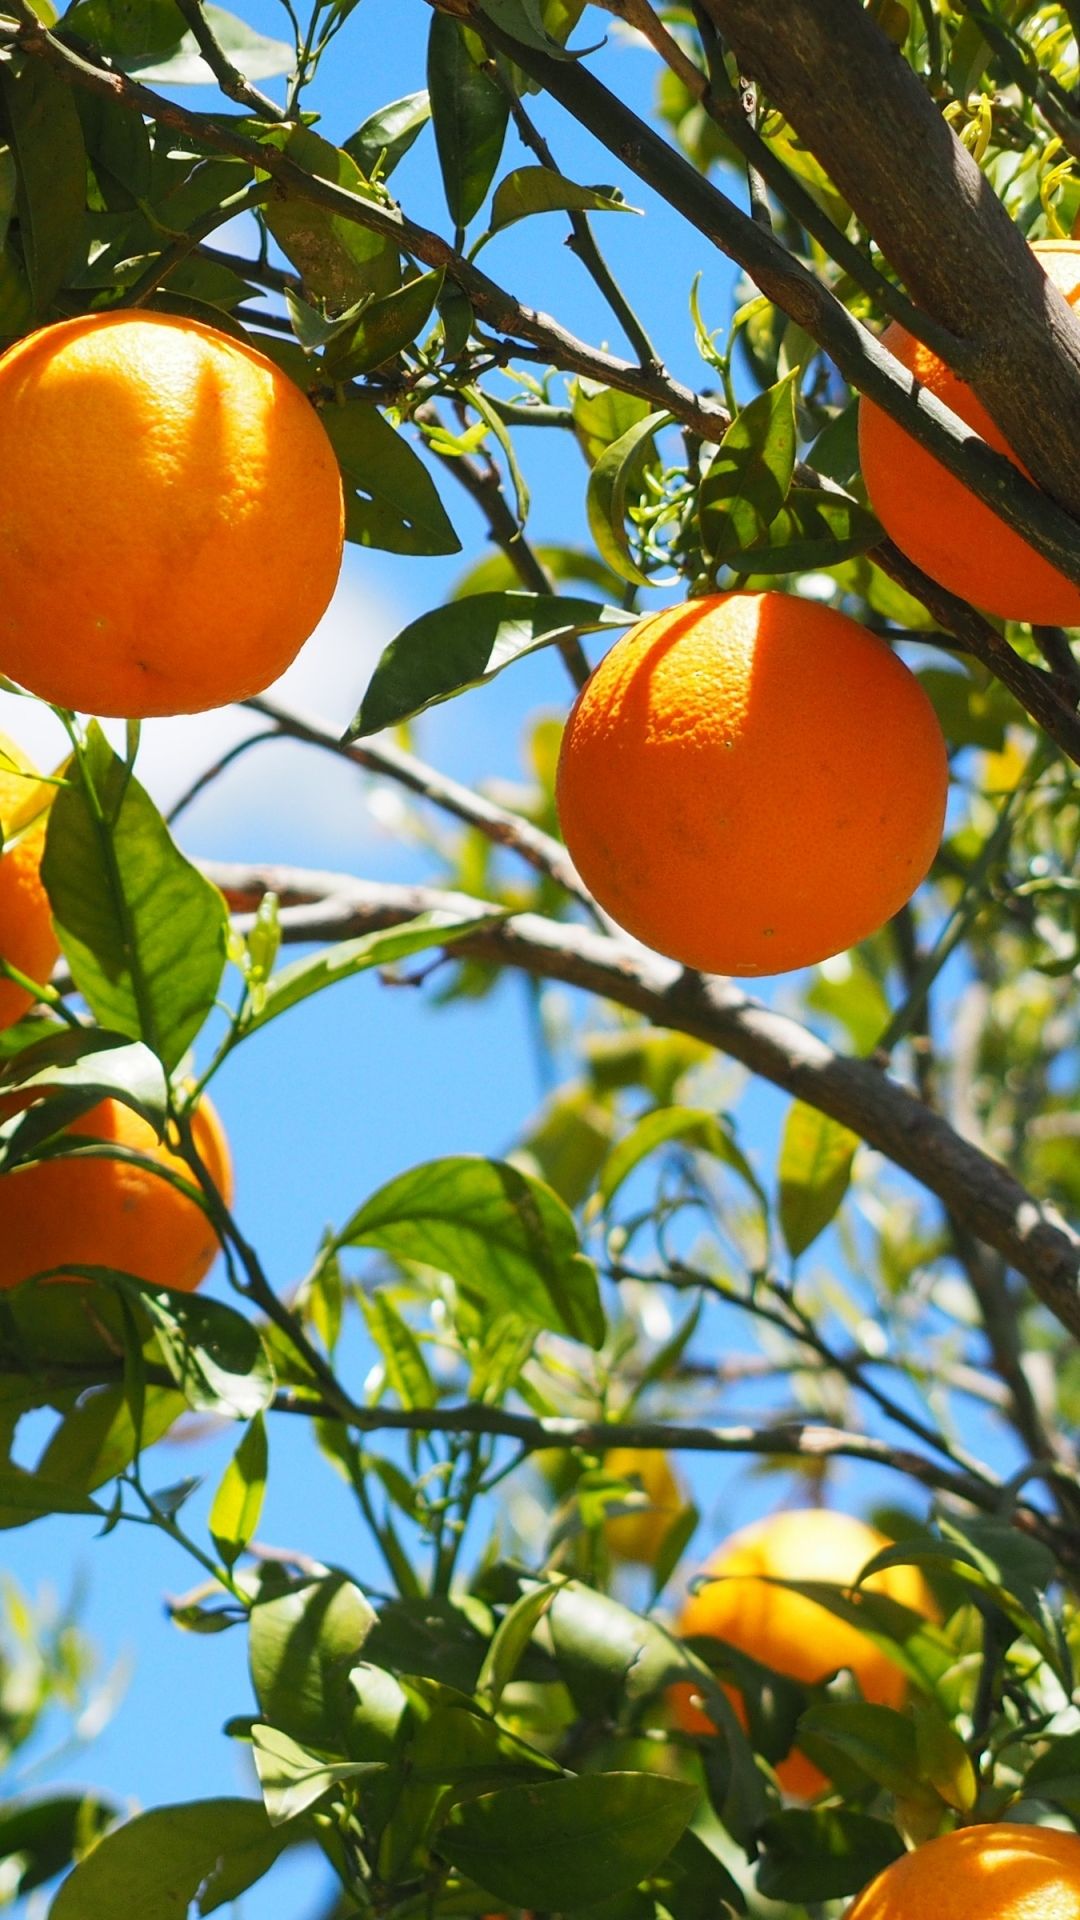 Free download Download wallpaper 3840x2400 oranges fruit orange tree citrus [3840x2400] for your Desktop, Mobile & Tablet. Explore Oranges Wallpaper. Oranges Wallpaper